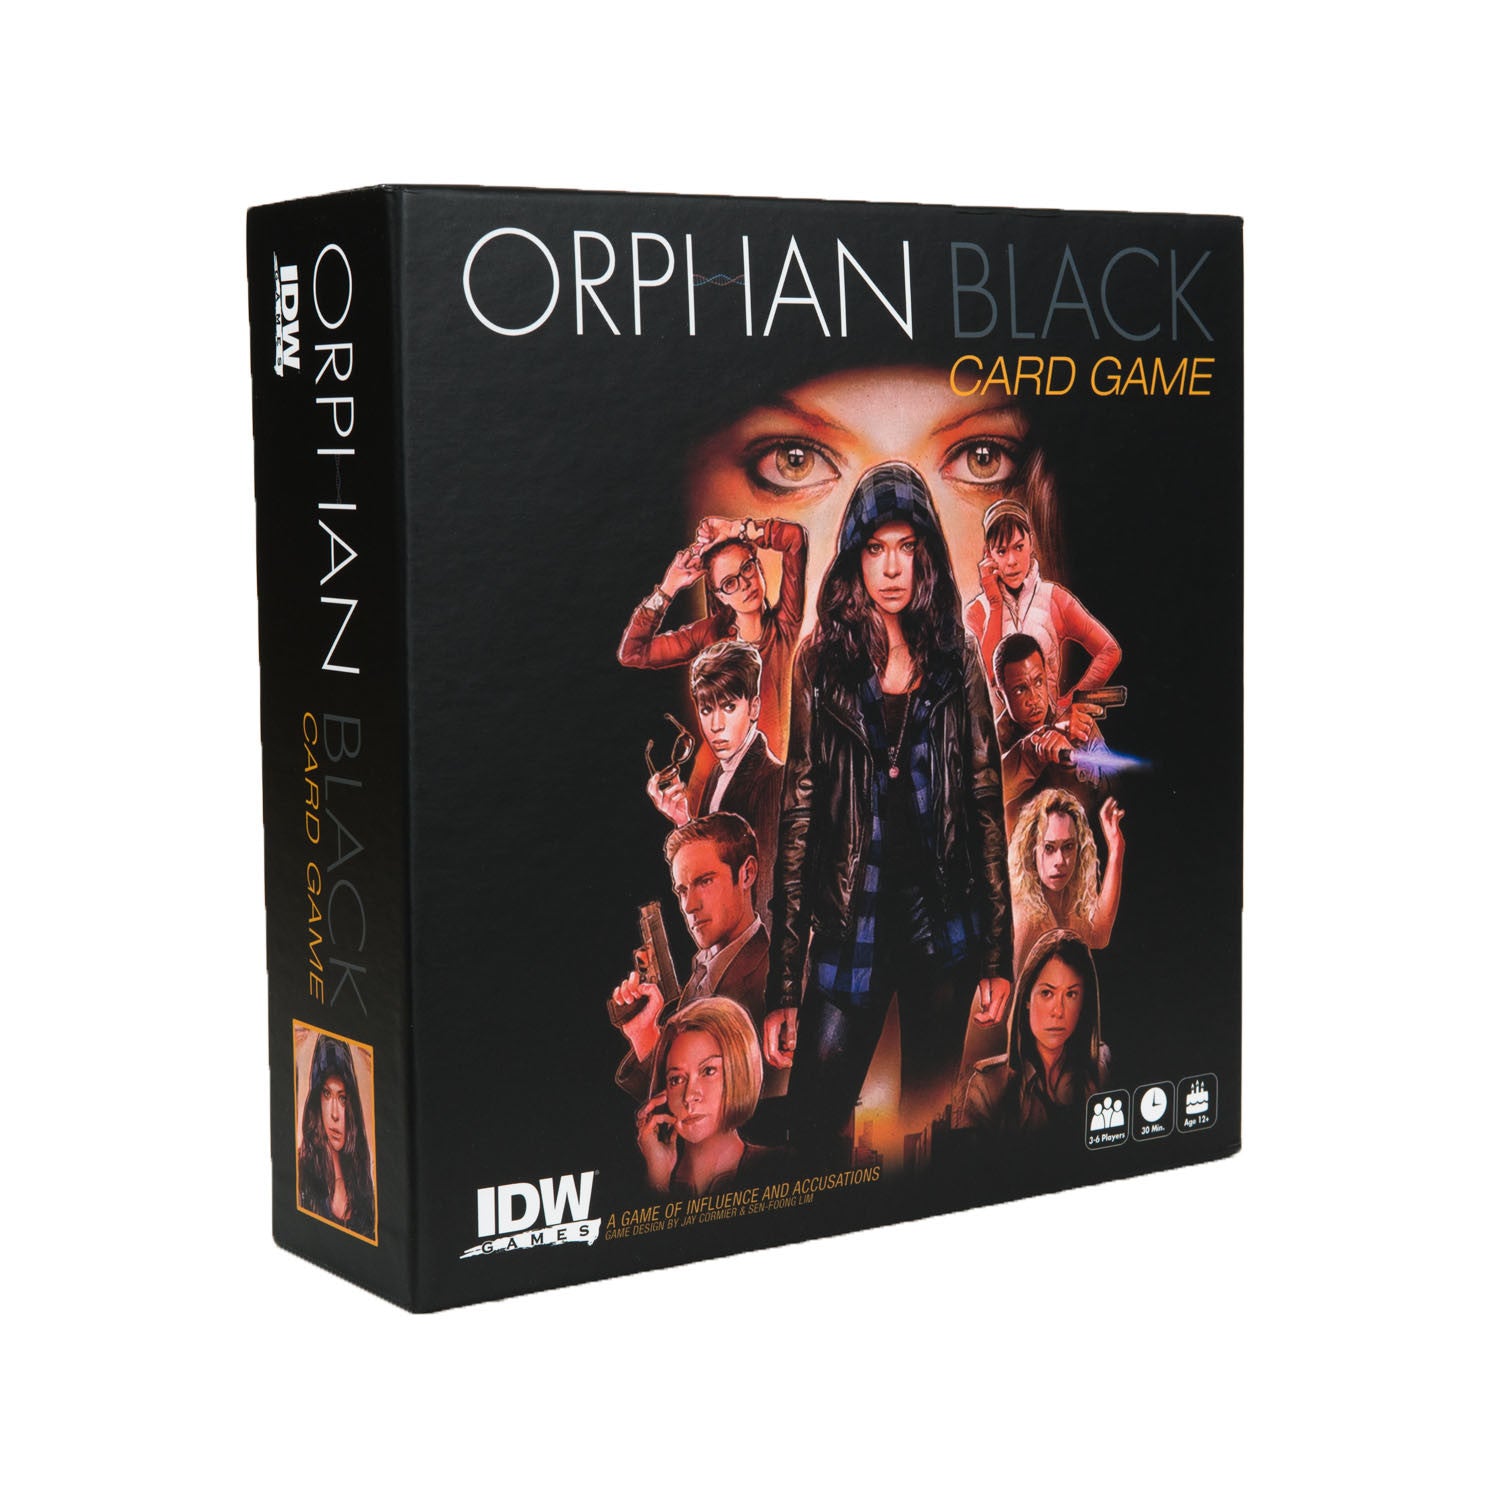 Orphan Black The Card Game